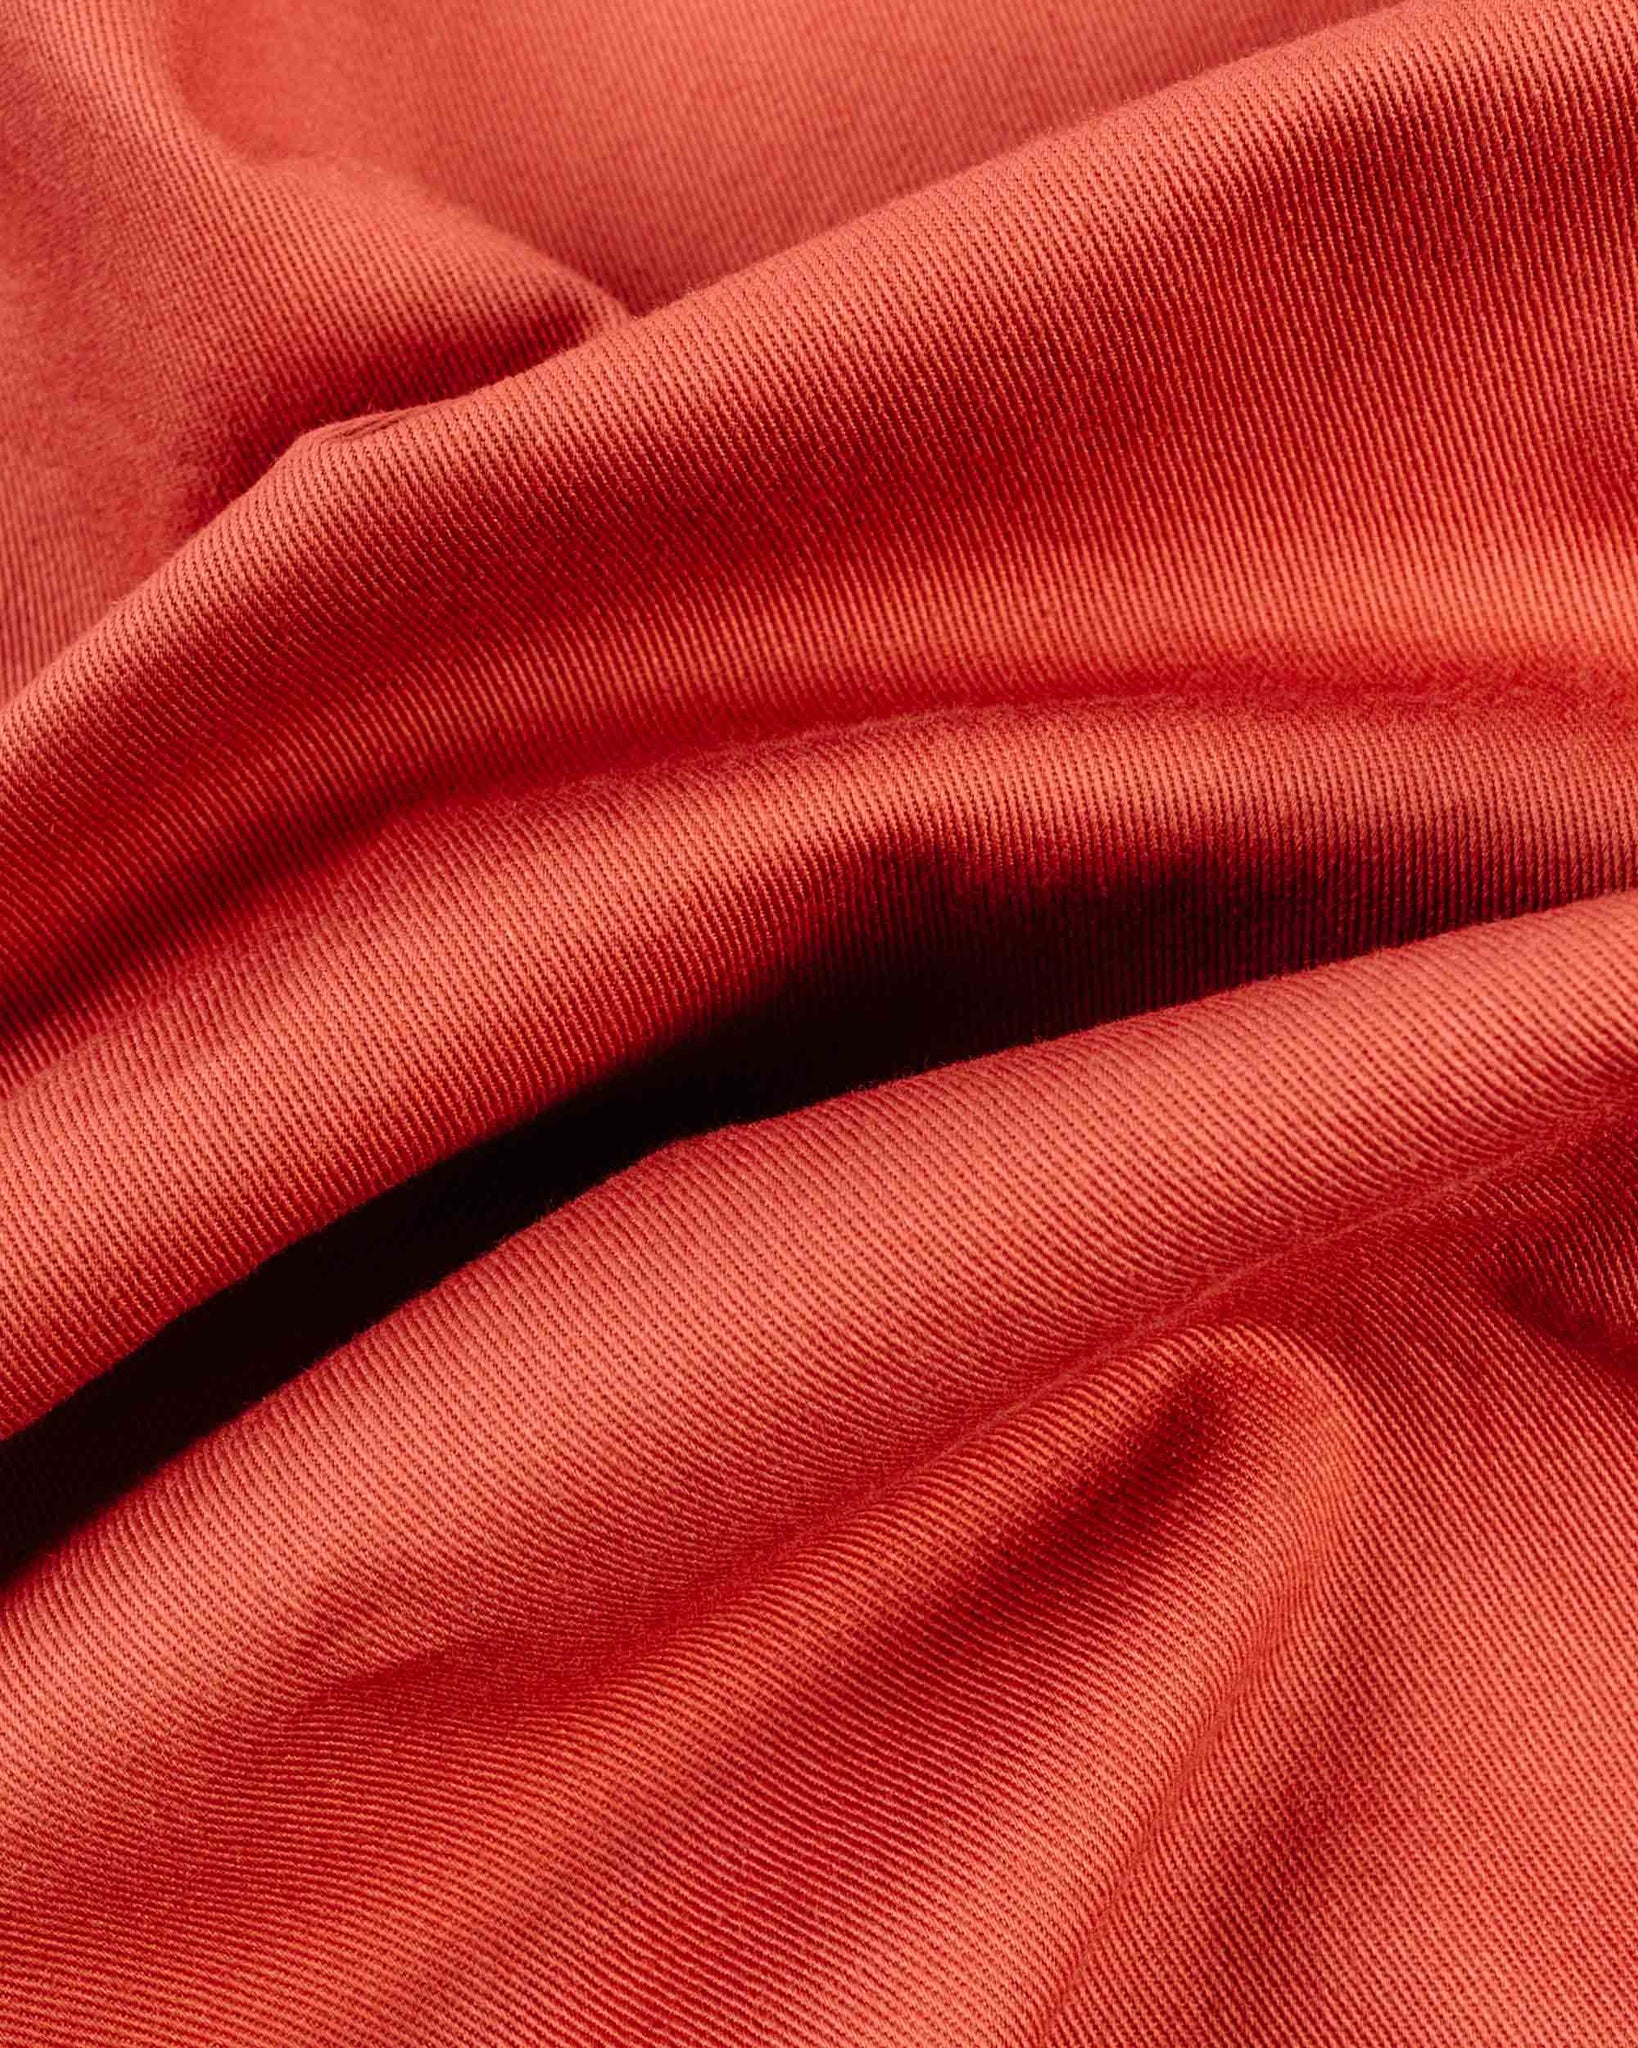 Engineered Garments Fatigue Pant Pink 6.5oz. Flat Twill Fabric